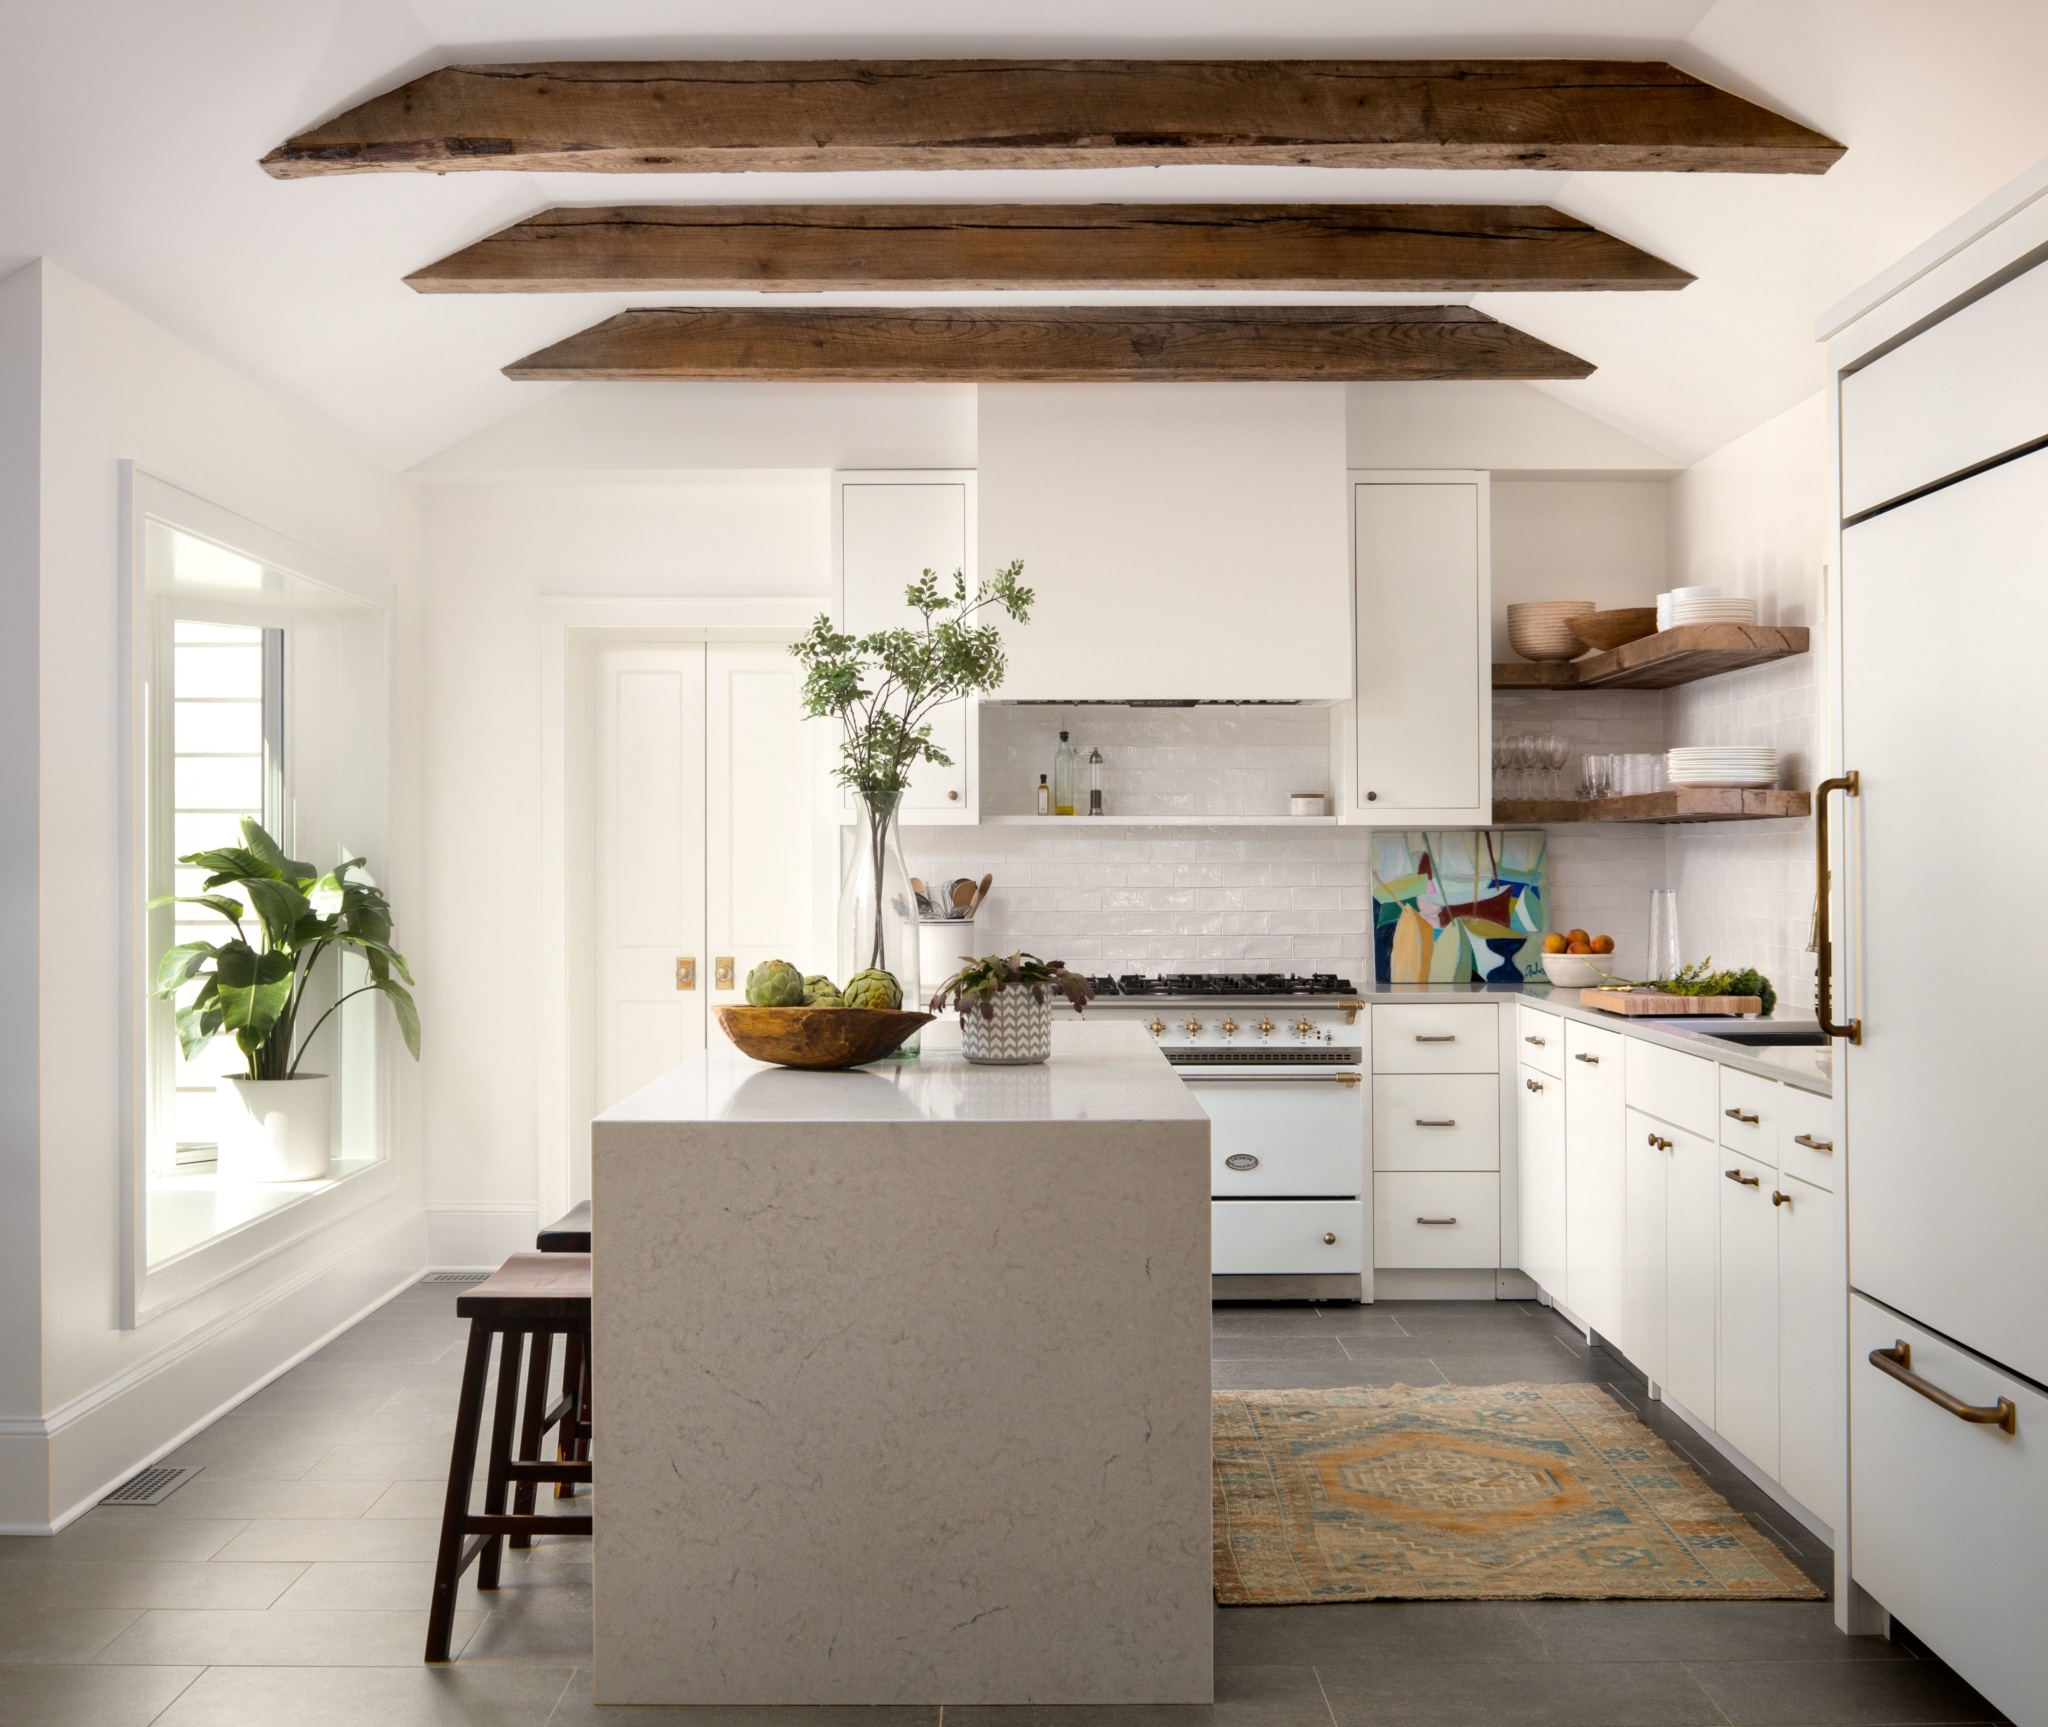 Zoe Feldman Interior Design kitchen | Photography: Stacy Zarin Goldberg - kitchen - kitchen design - kitchen decor - kitchen design ideas - wood beams - beams